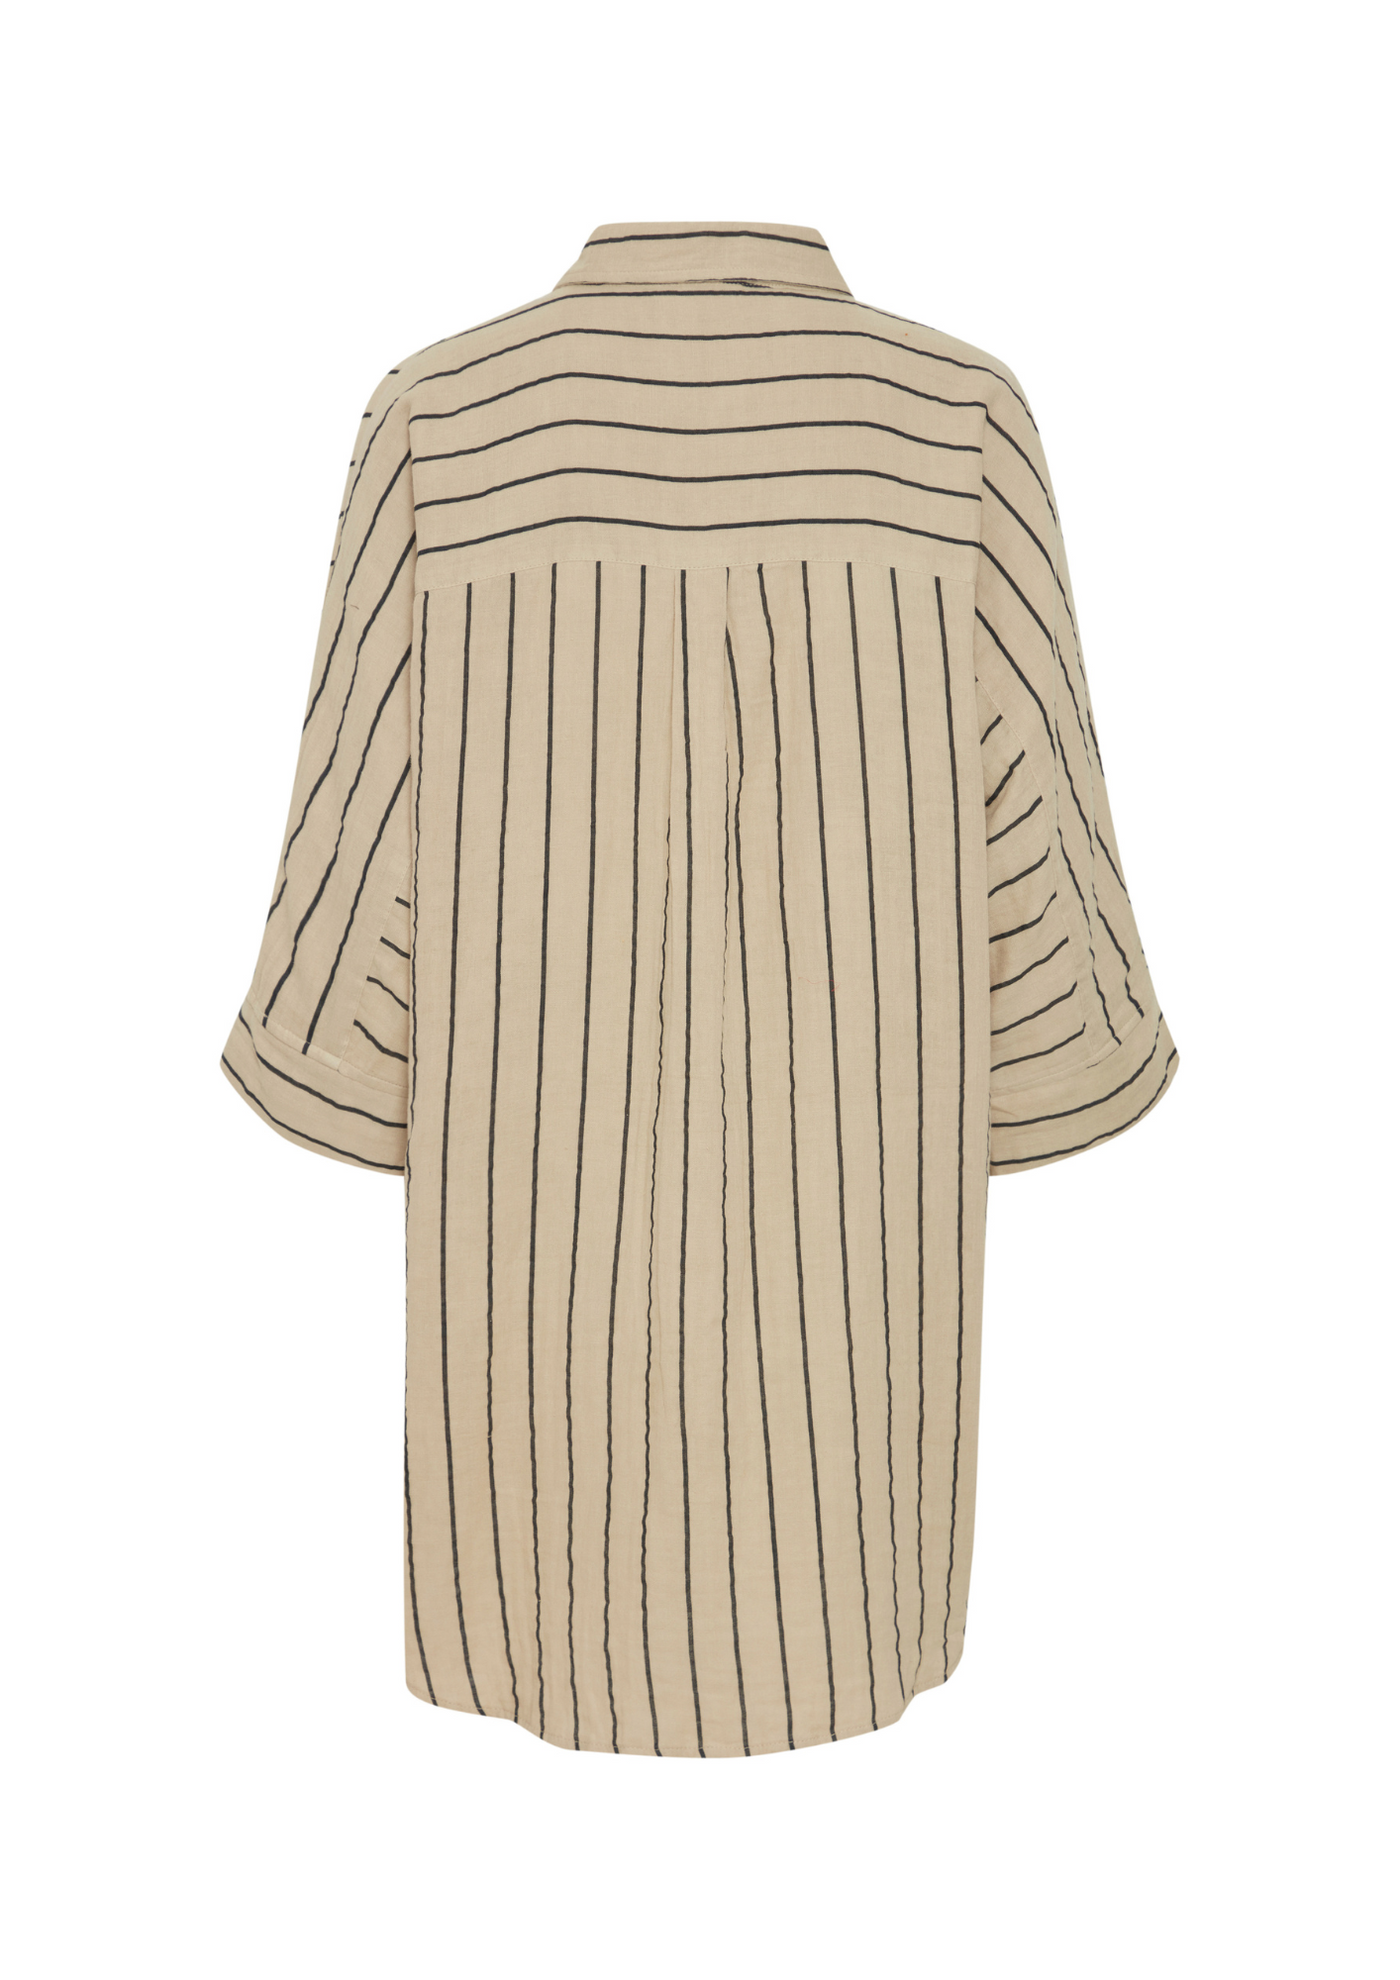 Ichi | Foxa Striped Beach Shirt Doeskin / Black Stripe